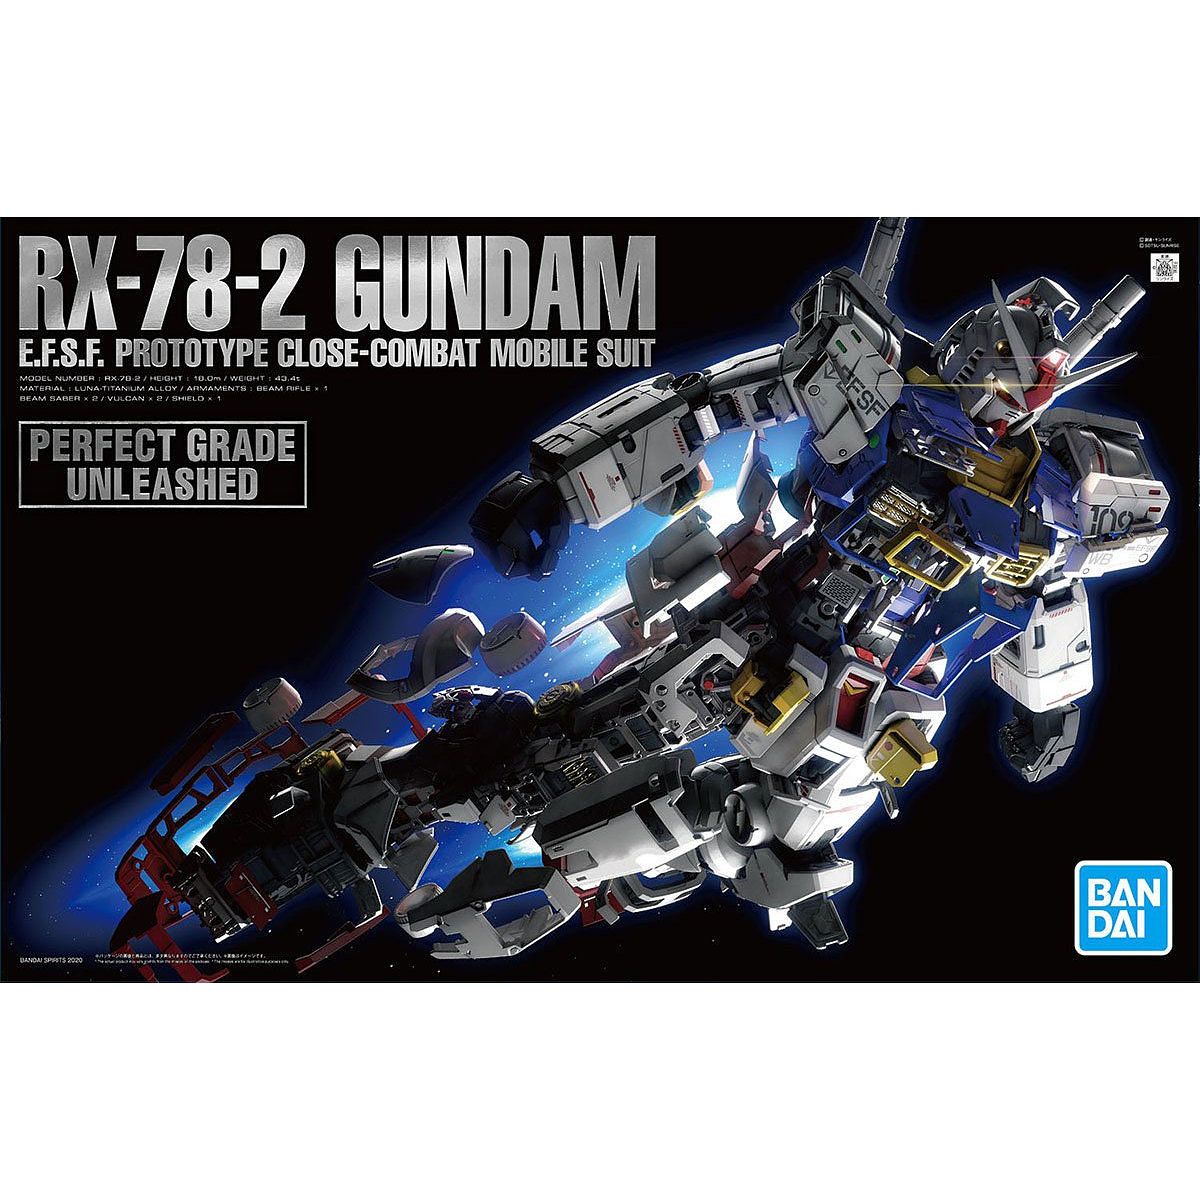 Gundam Perfect Grade Unleashed: 1/60 RX-78-2 Gundam  